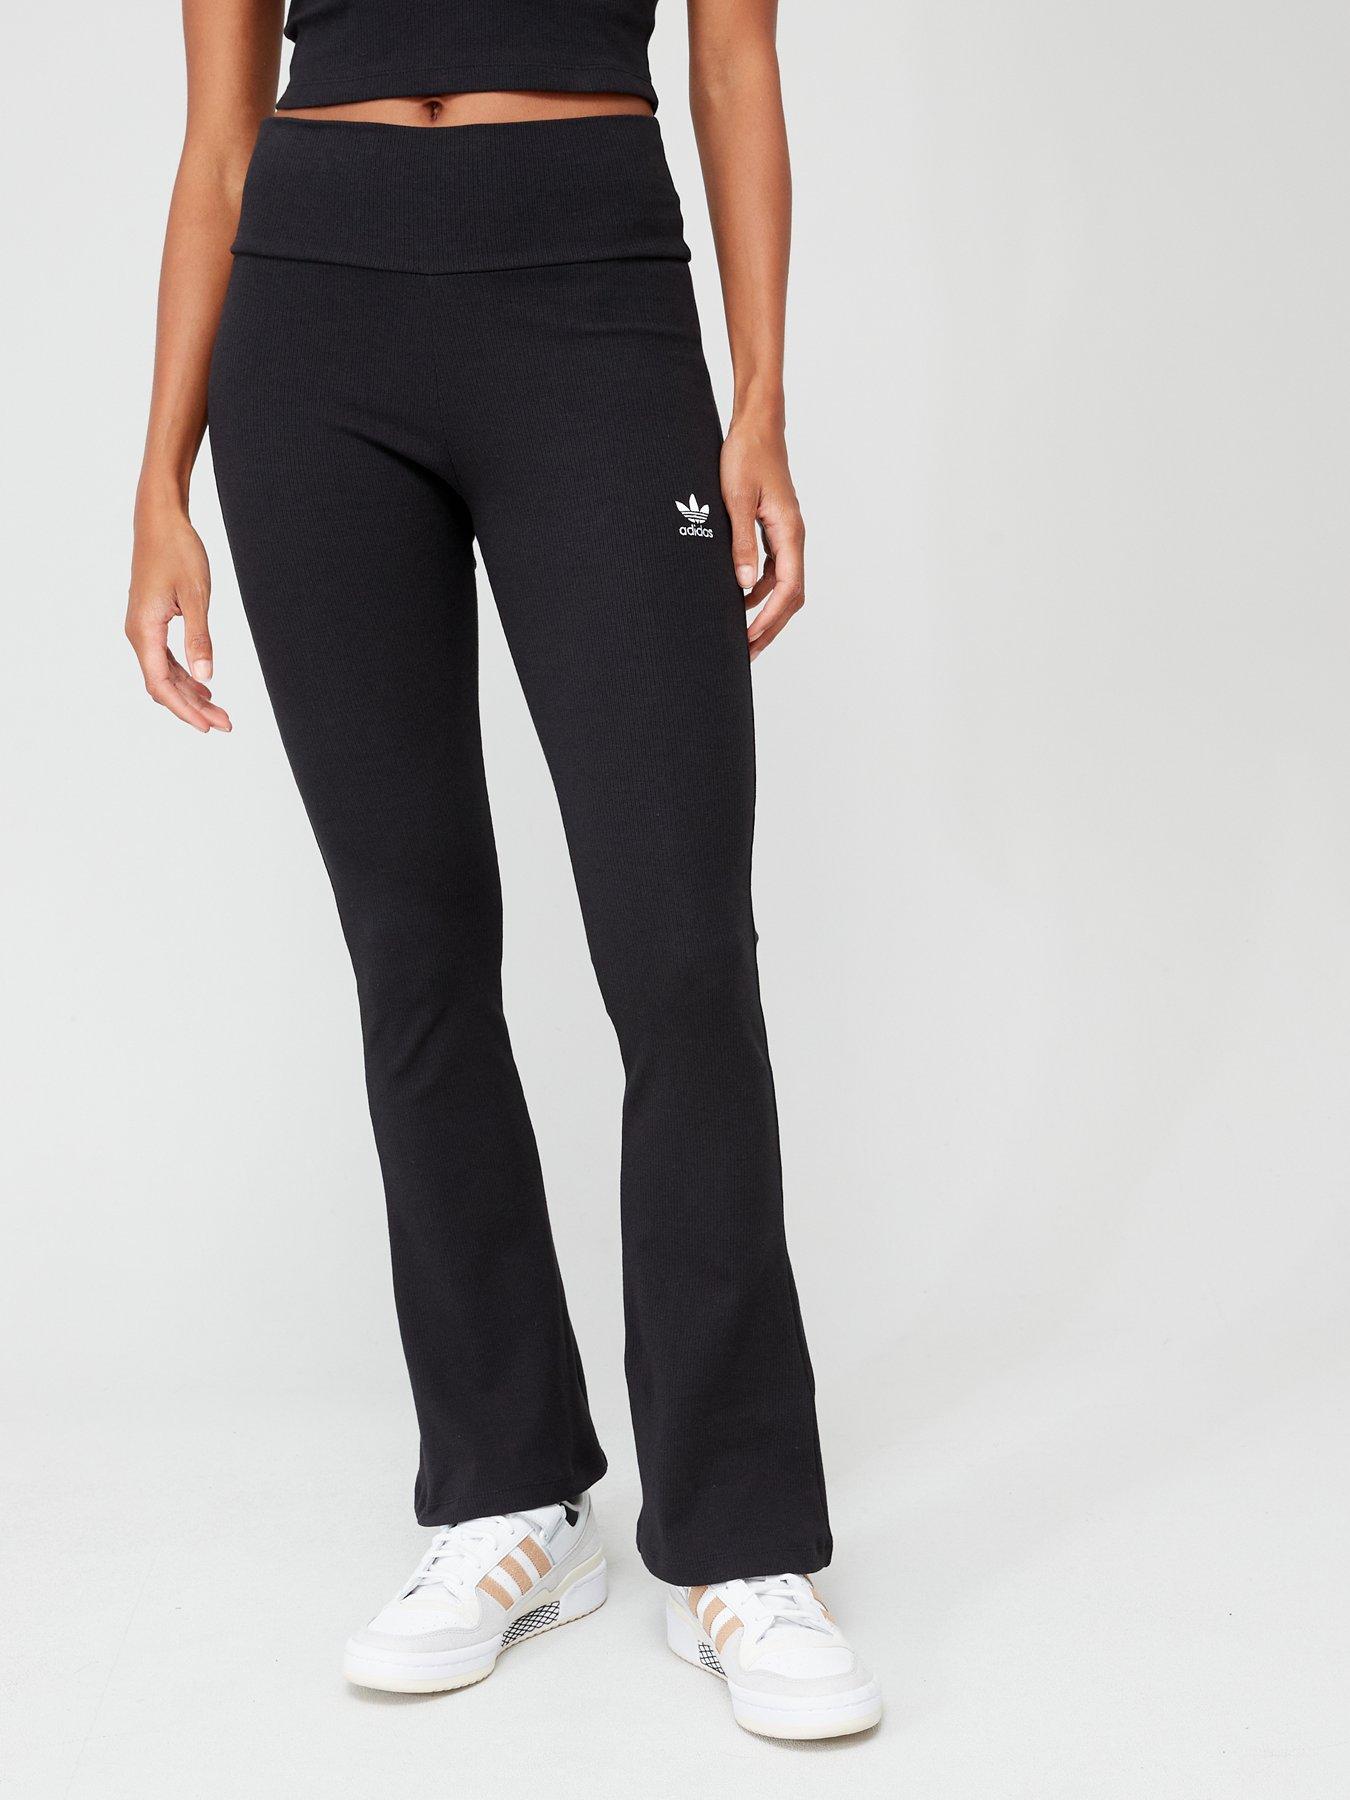 Adidas originals Women's Brown 'leopard Luxe' legging Shorts, Women's  Fashion, Bottoms, Shorts on Carousell